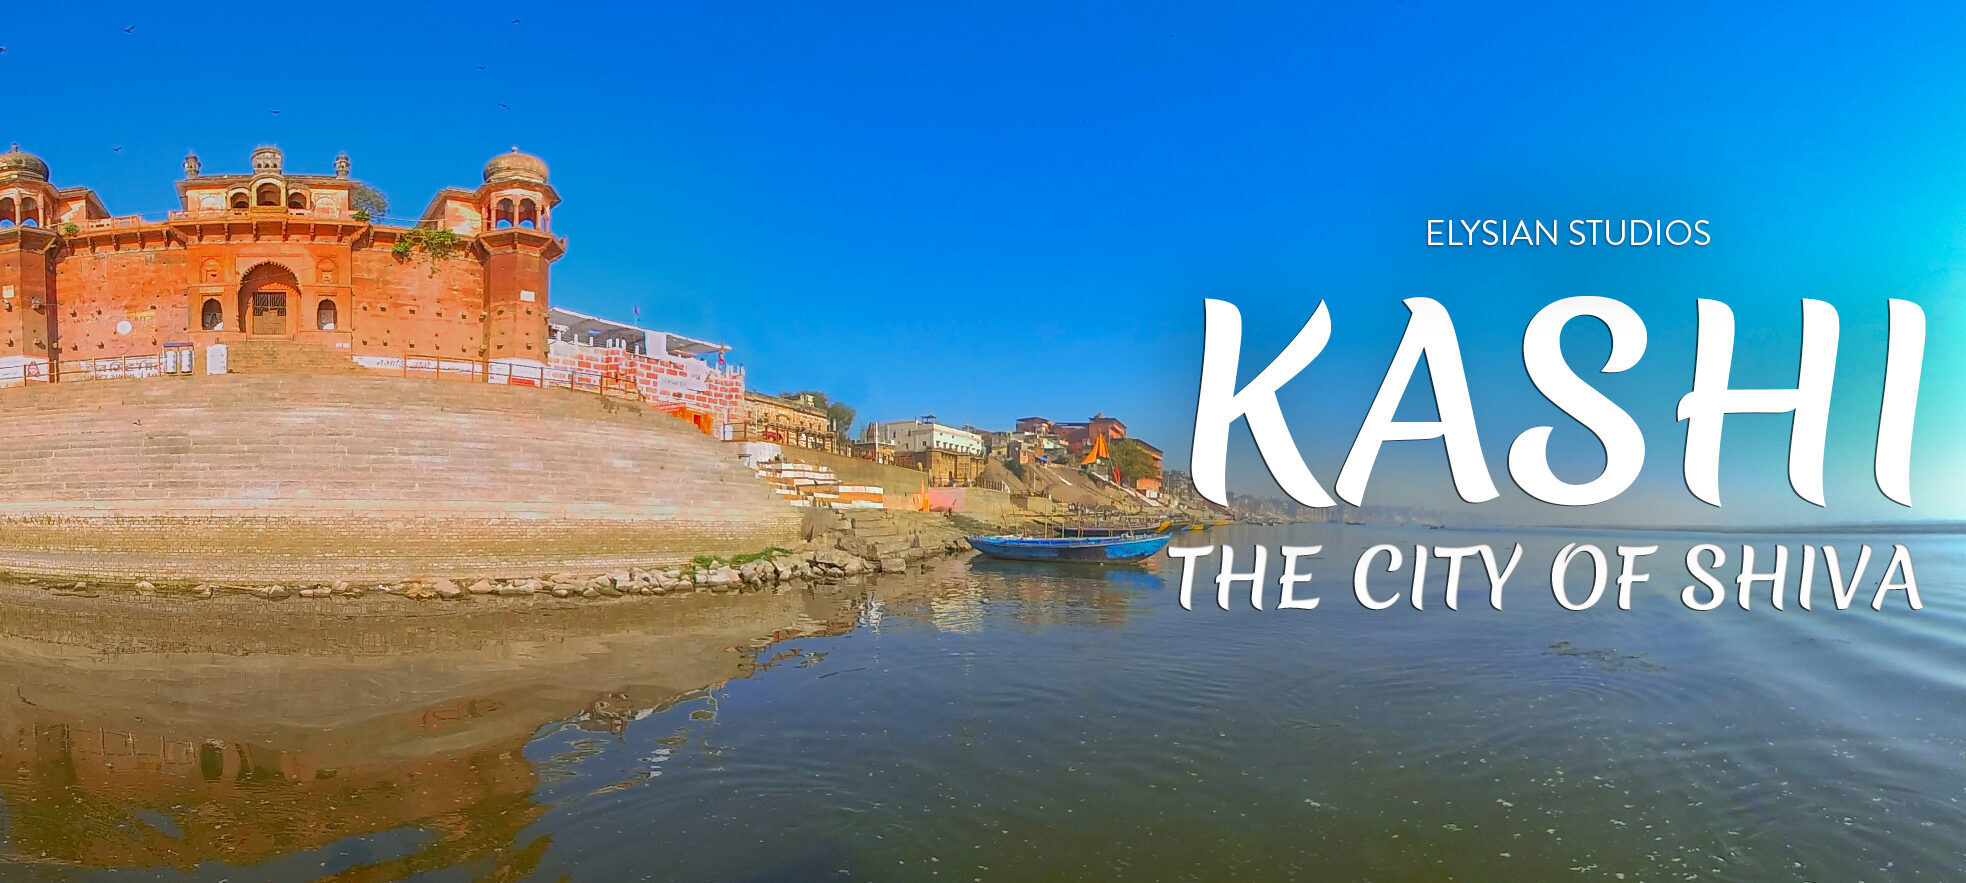 Kashi - The City of Lord Shiva